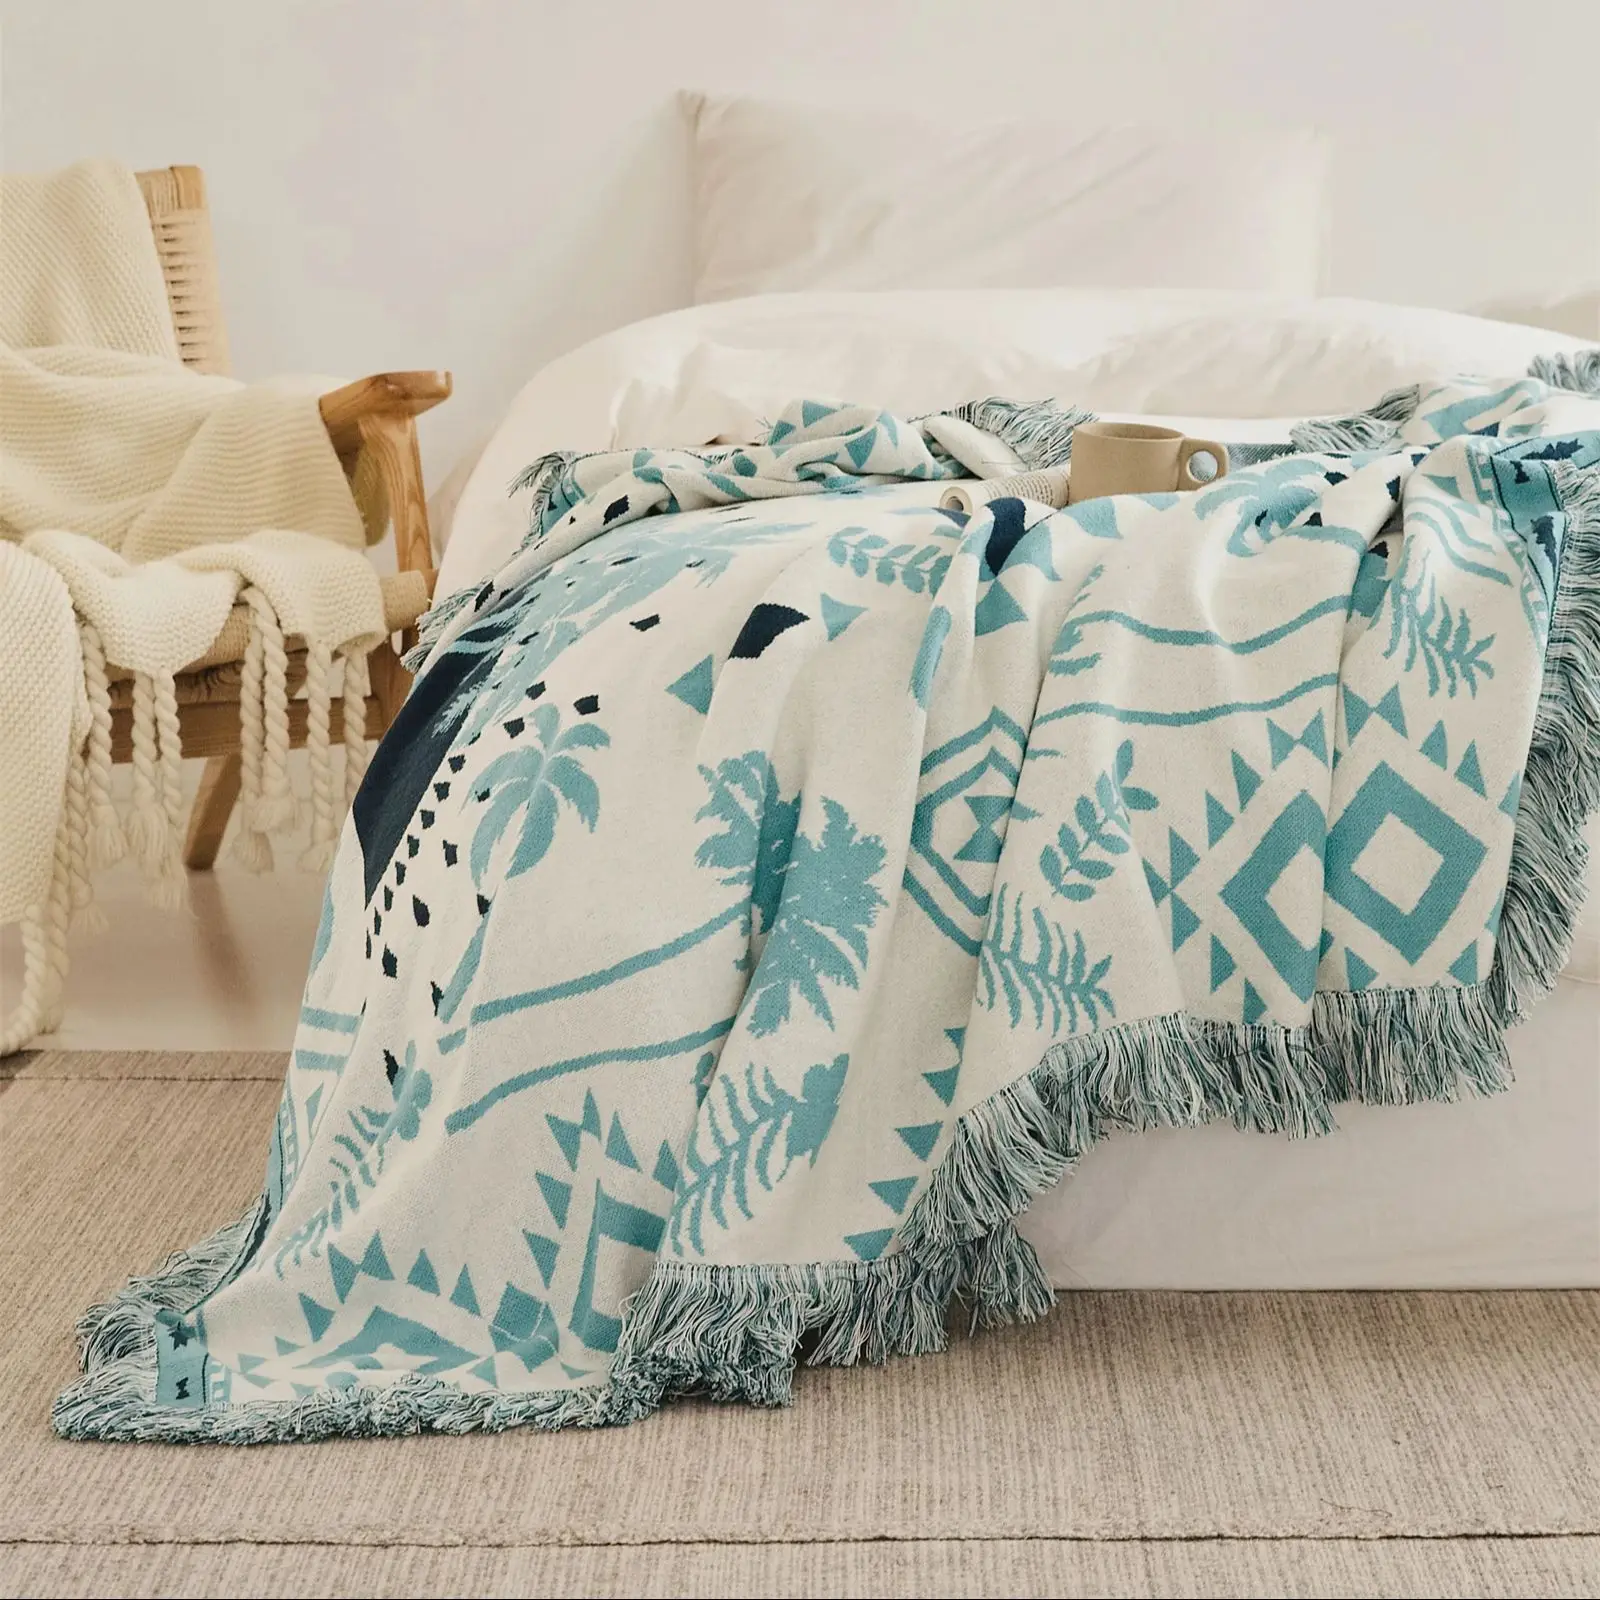 

REGINA Brand Bohemian Selva Pattern Blanket Soft Outdoor Travel Picnic Camping Cotton Knitted Blanket Sofa Bed Warm TV Blankets